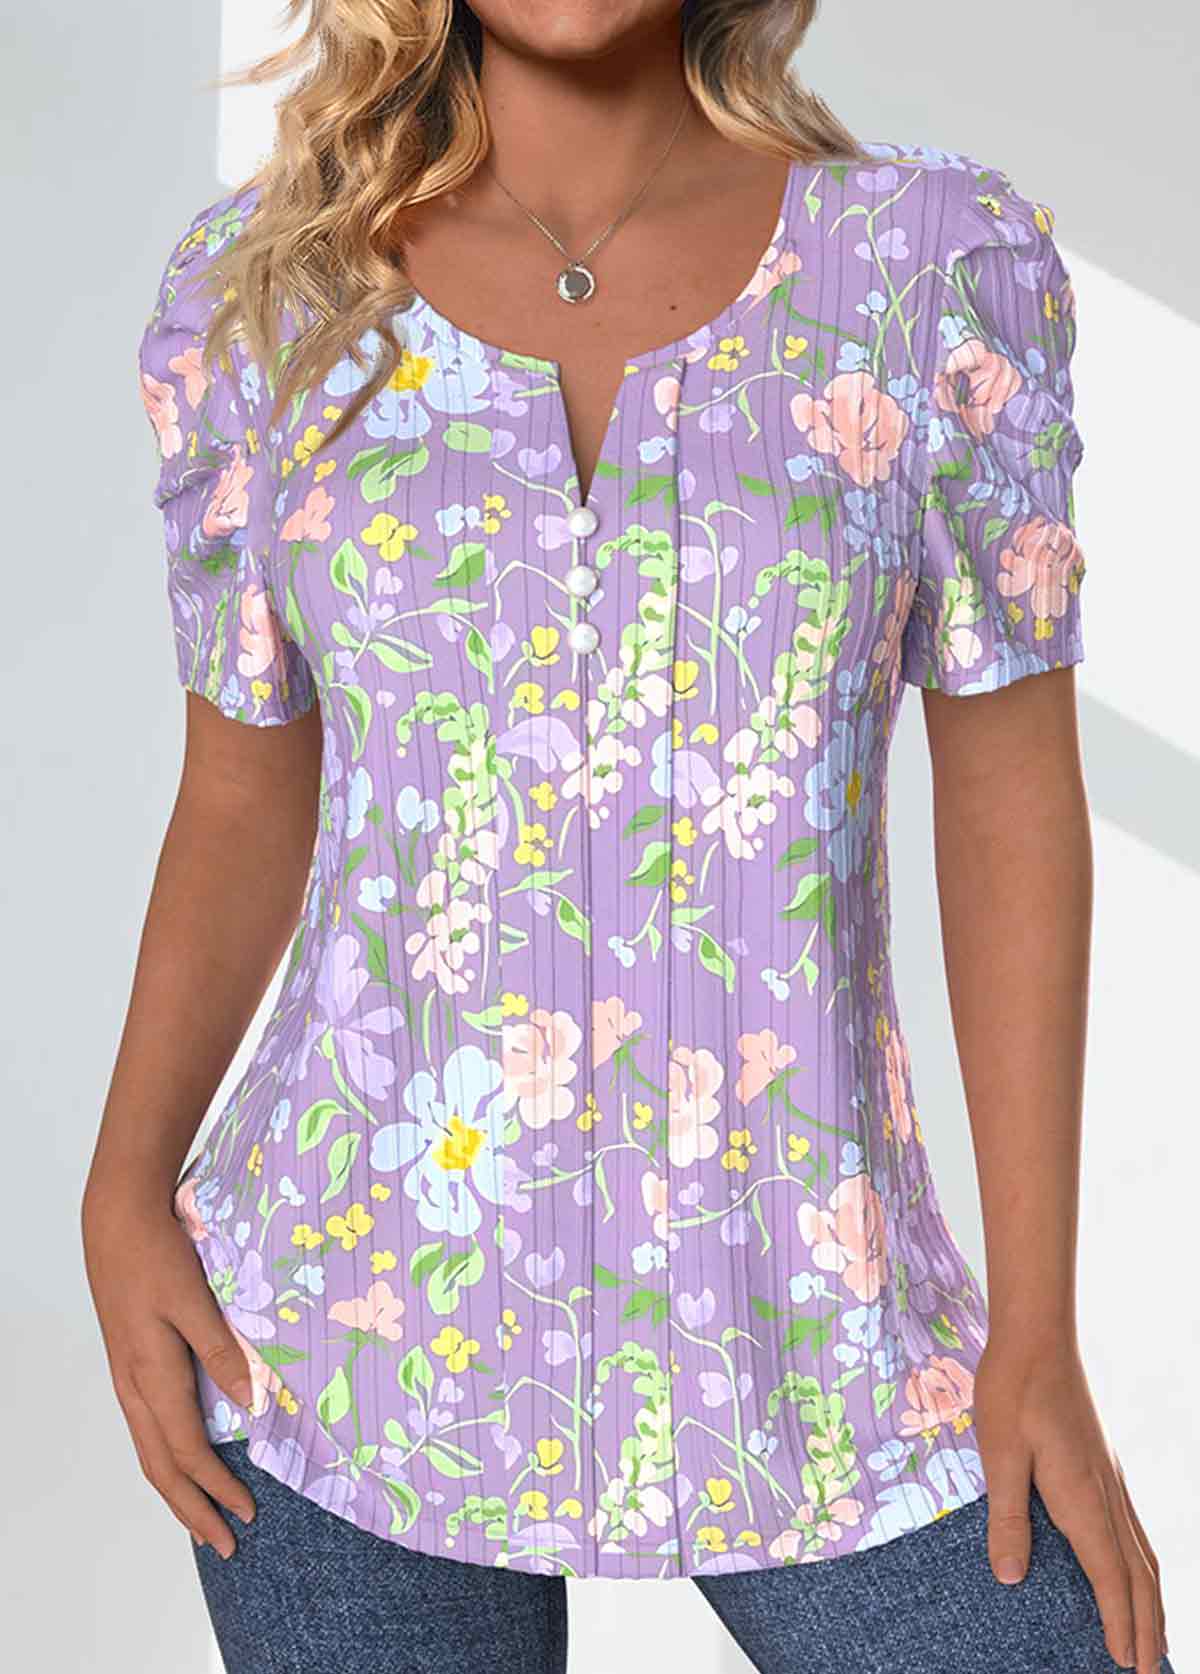 Ditsy Floral Print Textured Fabric Light Purple T Shirt